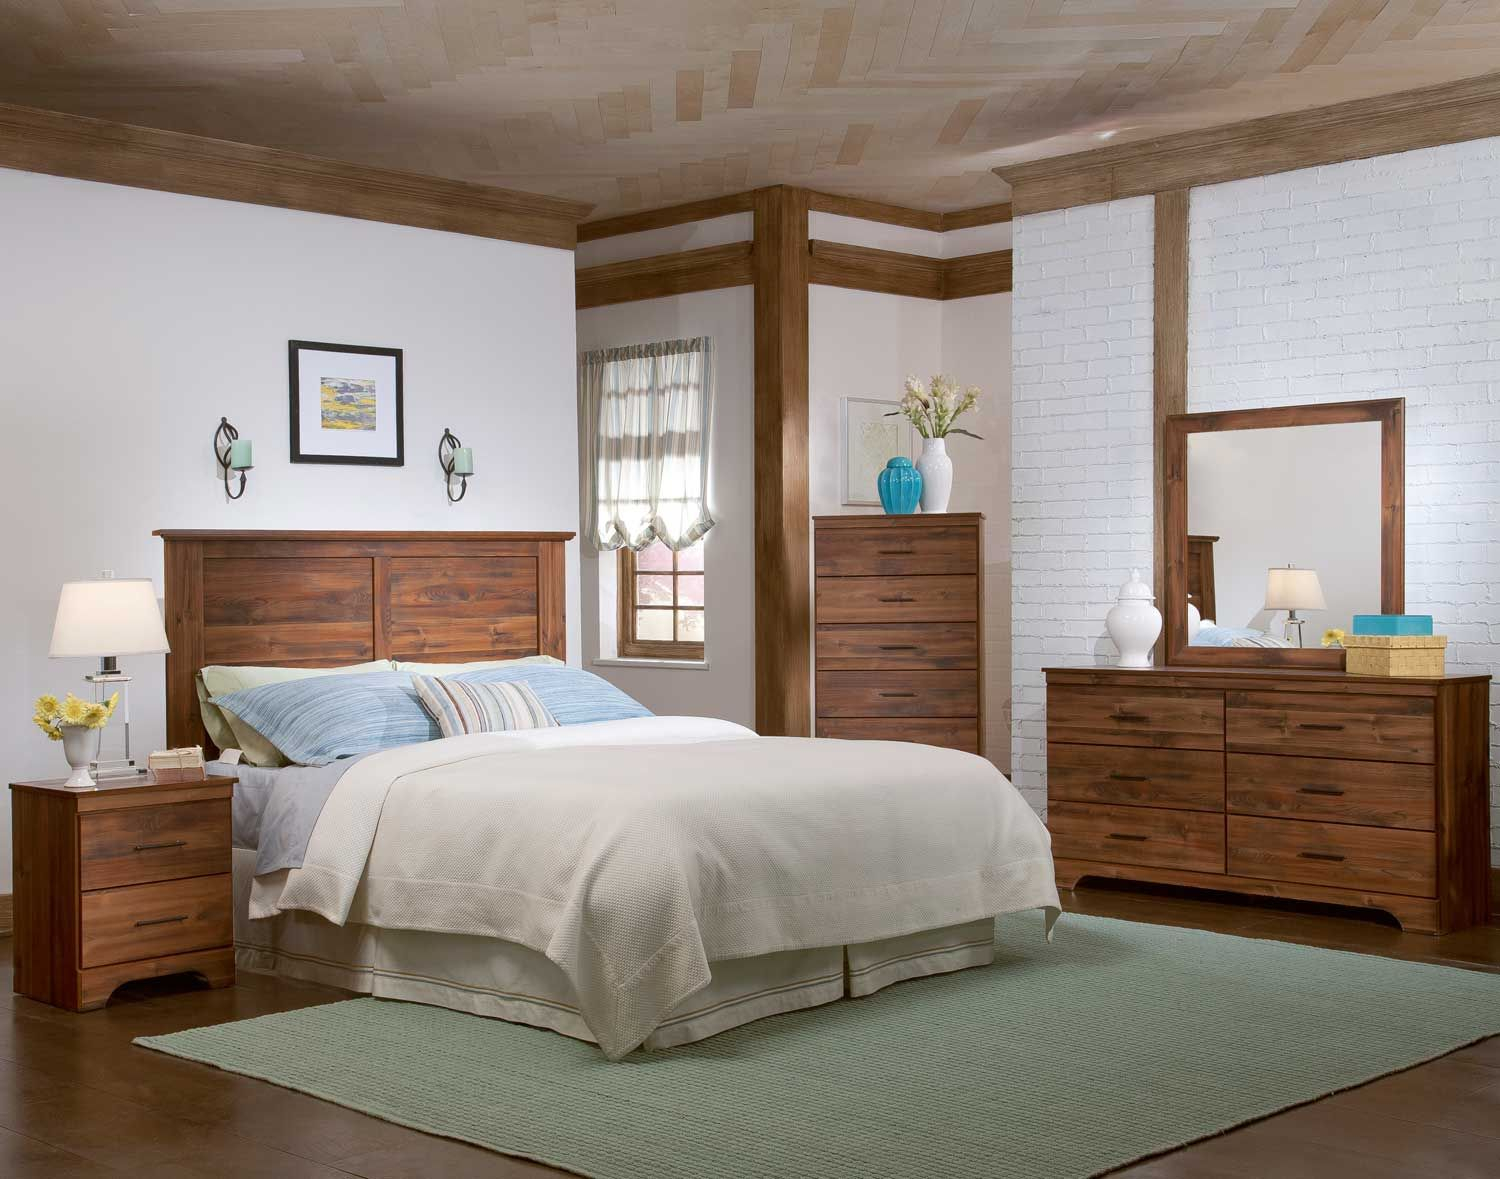 Kith Furniture Livingston Bedroom Set Staff Popular Picks throughout sizing 1500 X 1179